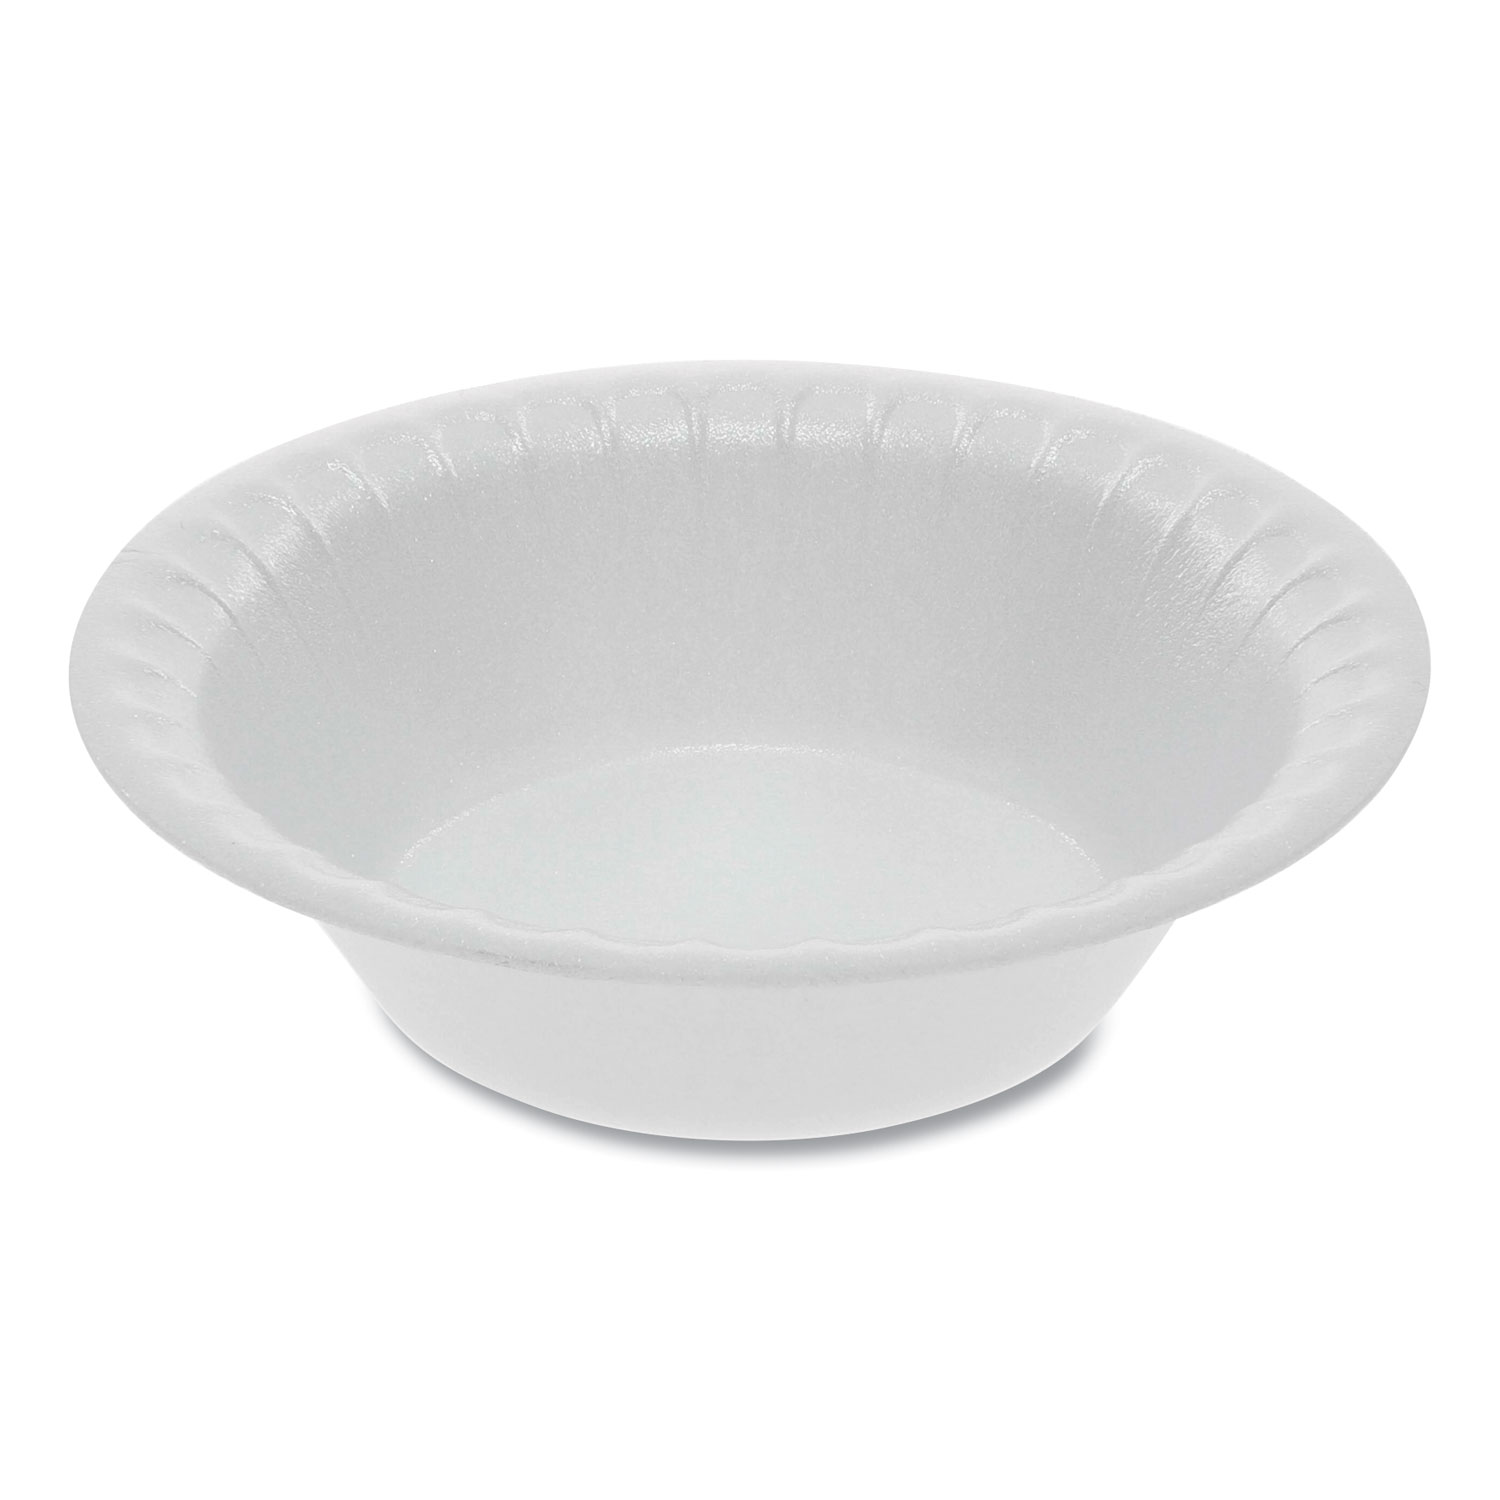 Pactiv Unlaminated Foam Dinnerware, Bowl, 5 oz, 4.5 Diameter, White, 1,250/Carton